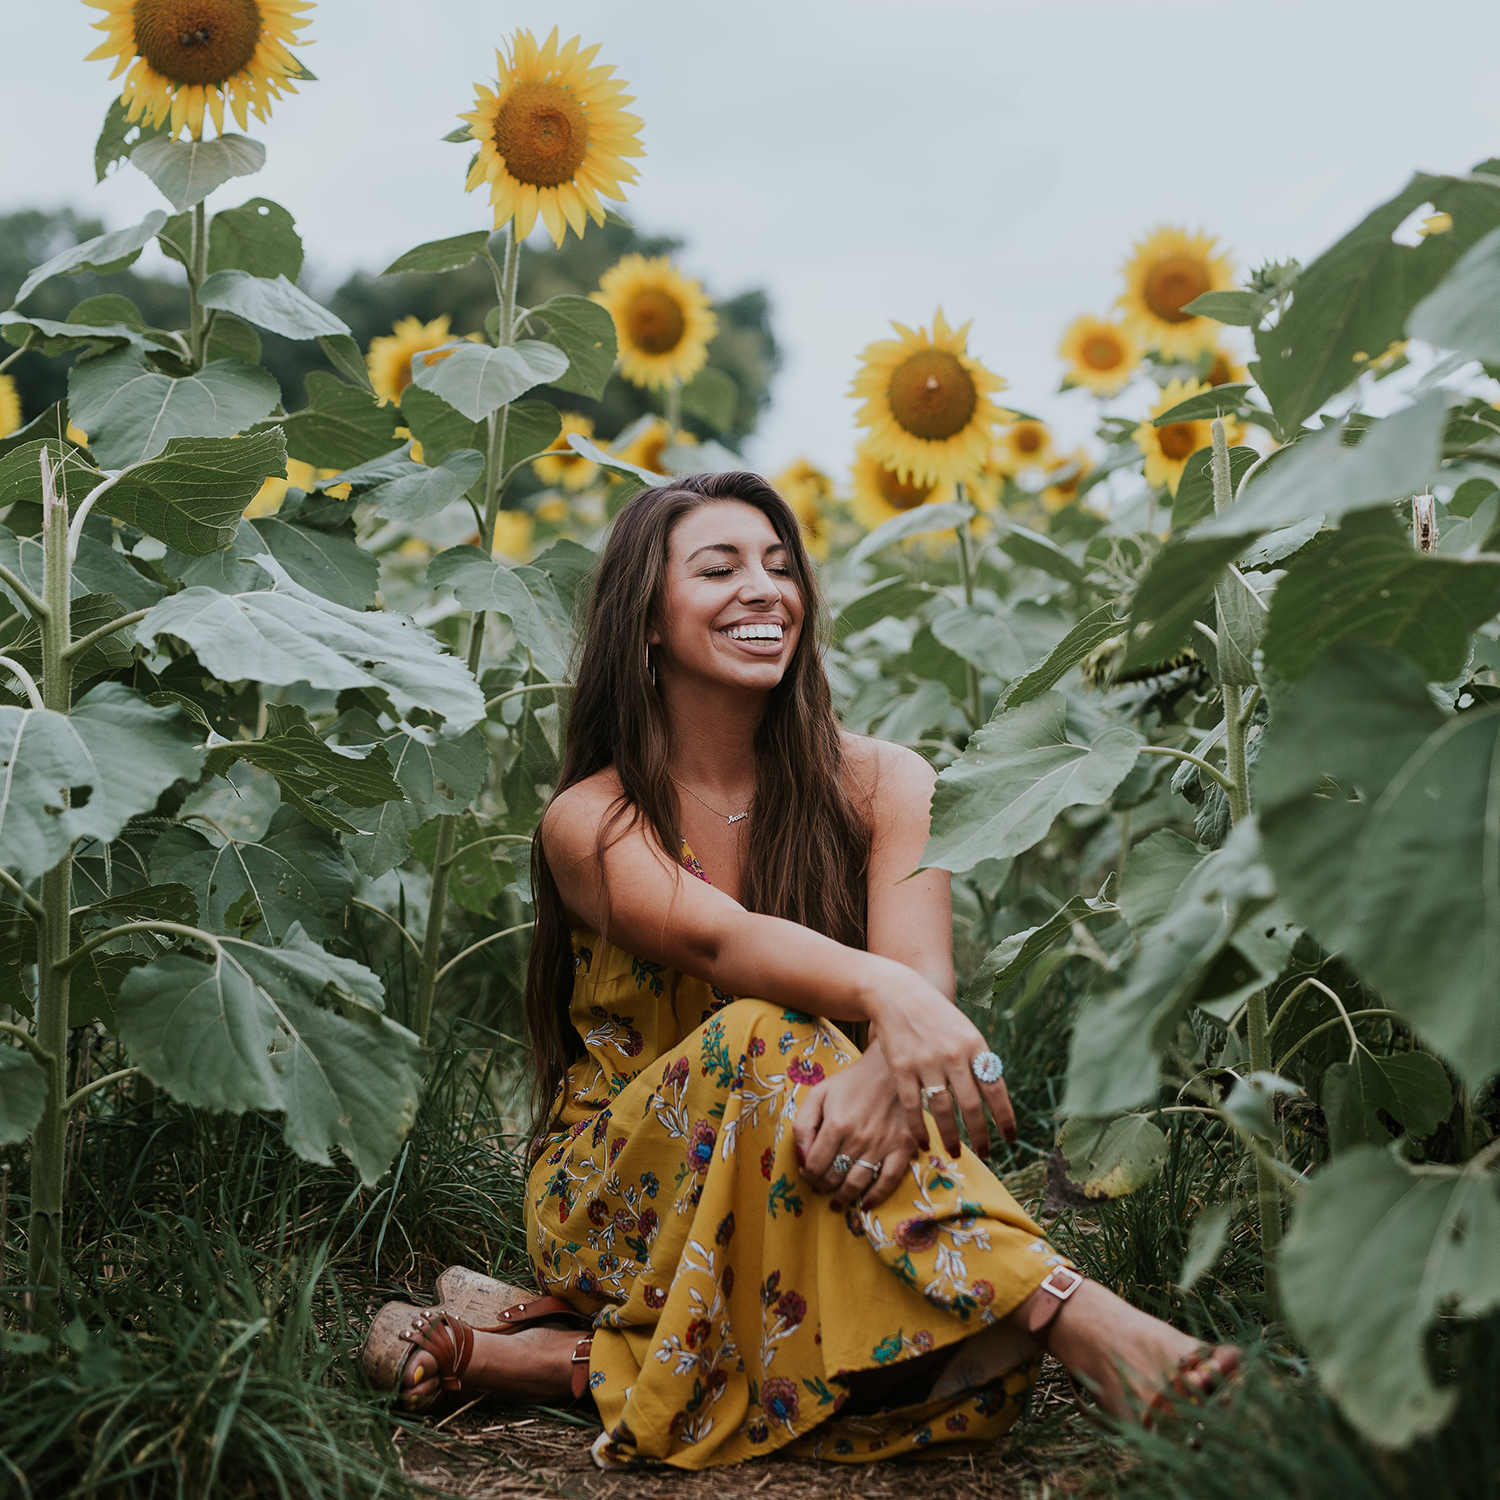 Woman sitting in a sunflower garden by Brooke Cagle via Unsplash